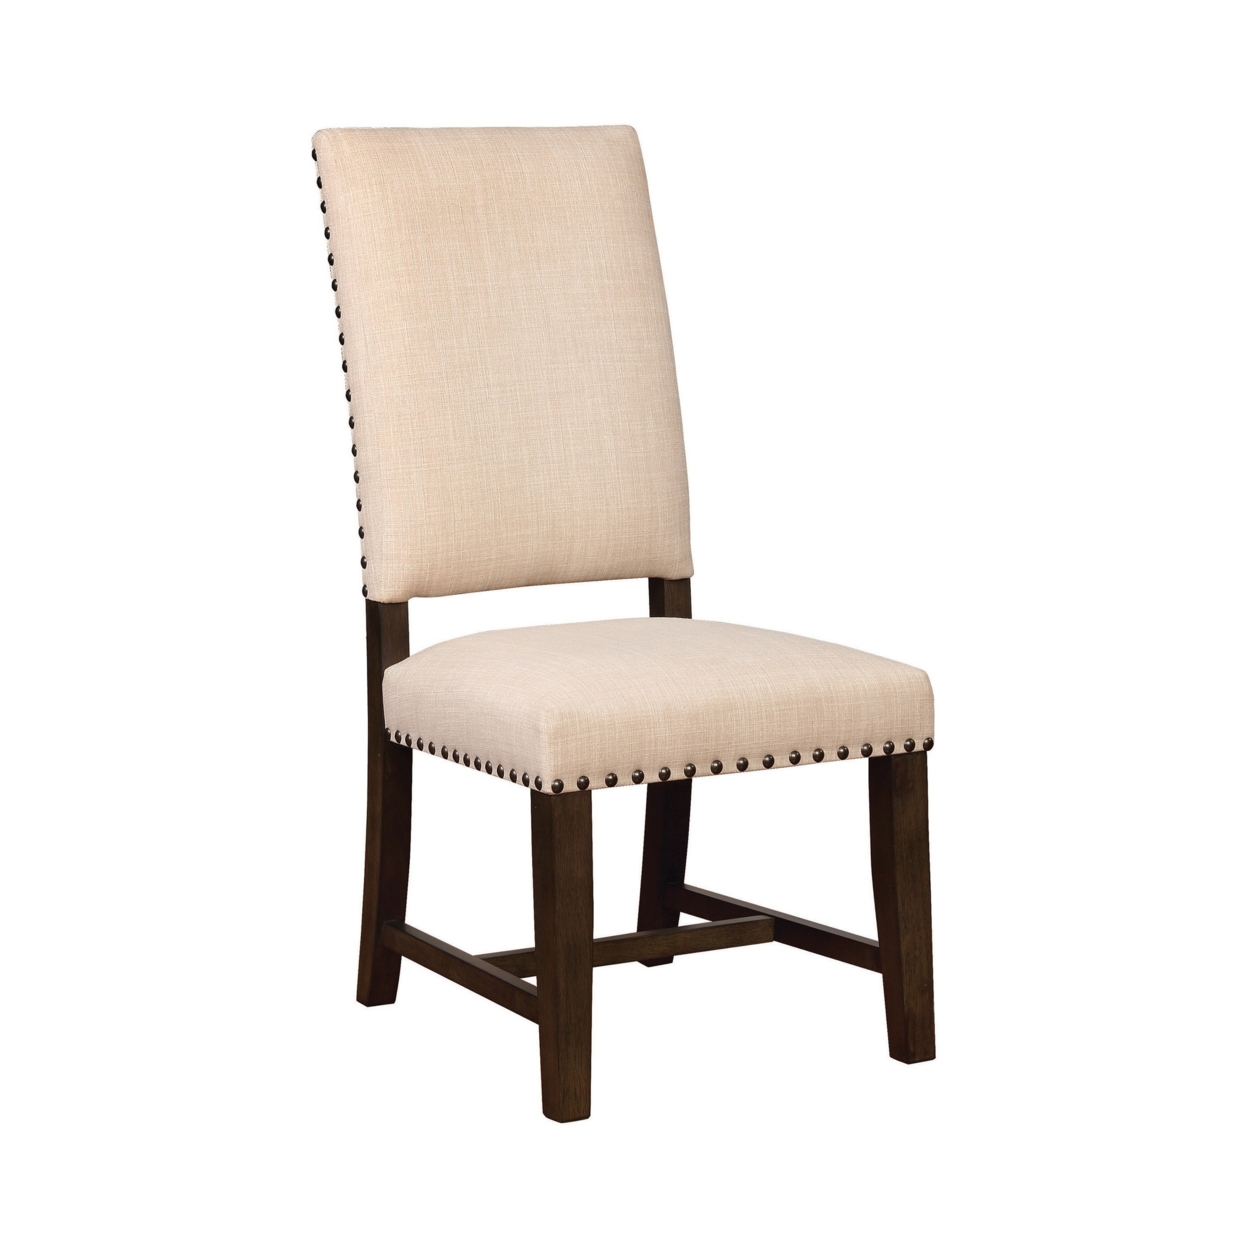 Nailhead Trim Fabric Side Chair With High Back, Set Of 2, Beige- Saltoro Sherpi